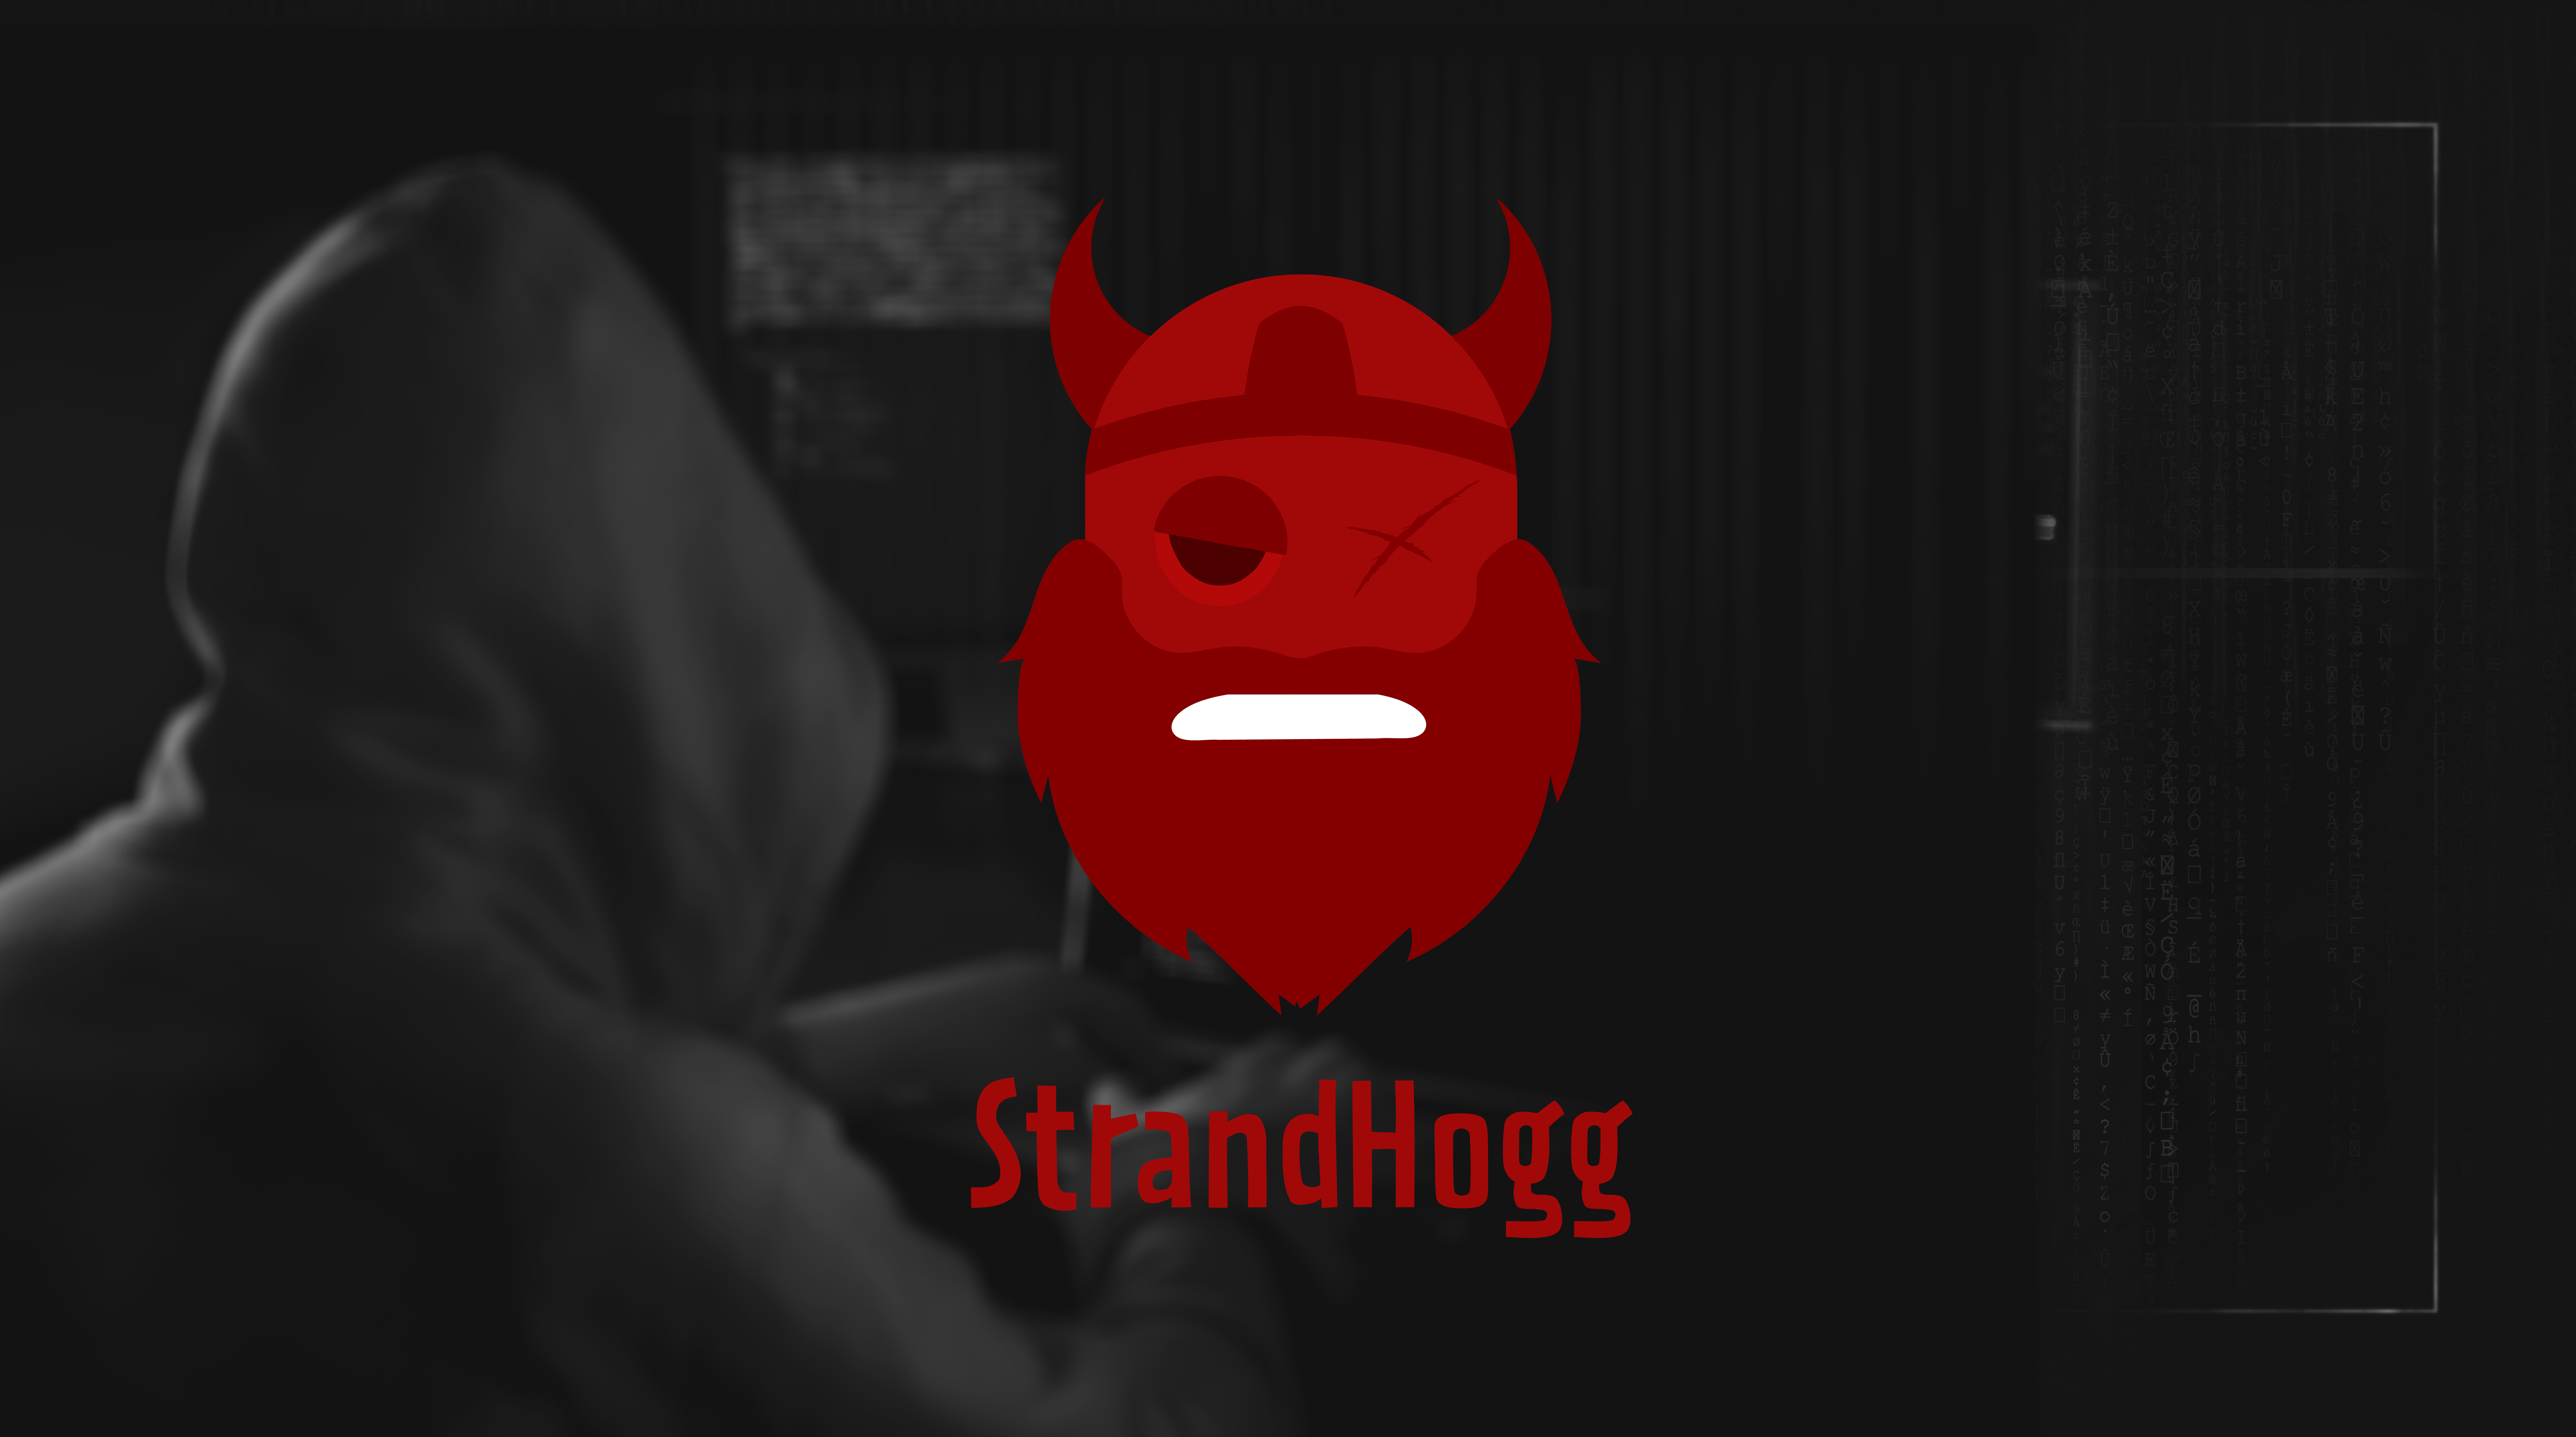 The StrandHogg vulnerability